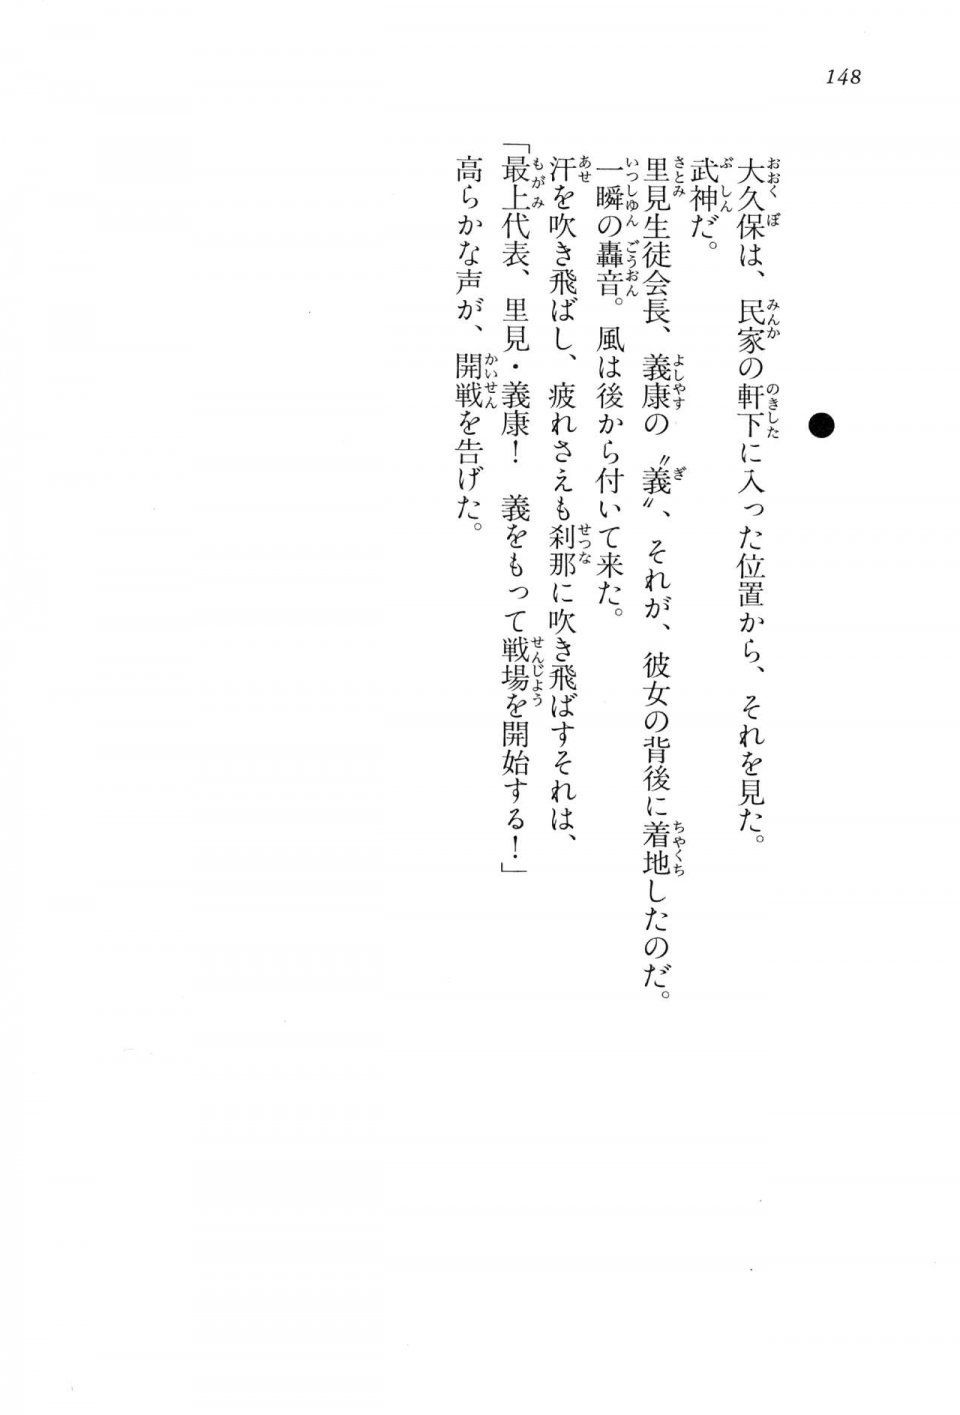 Kyoukai Senjou no Horizon LN Vol 15(6C) Part 1 - Photo #148